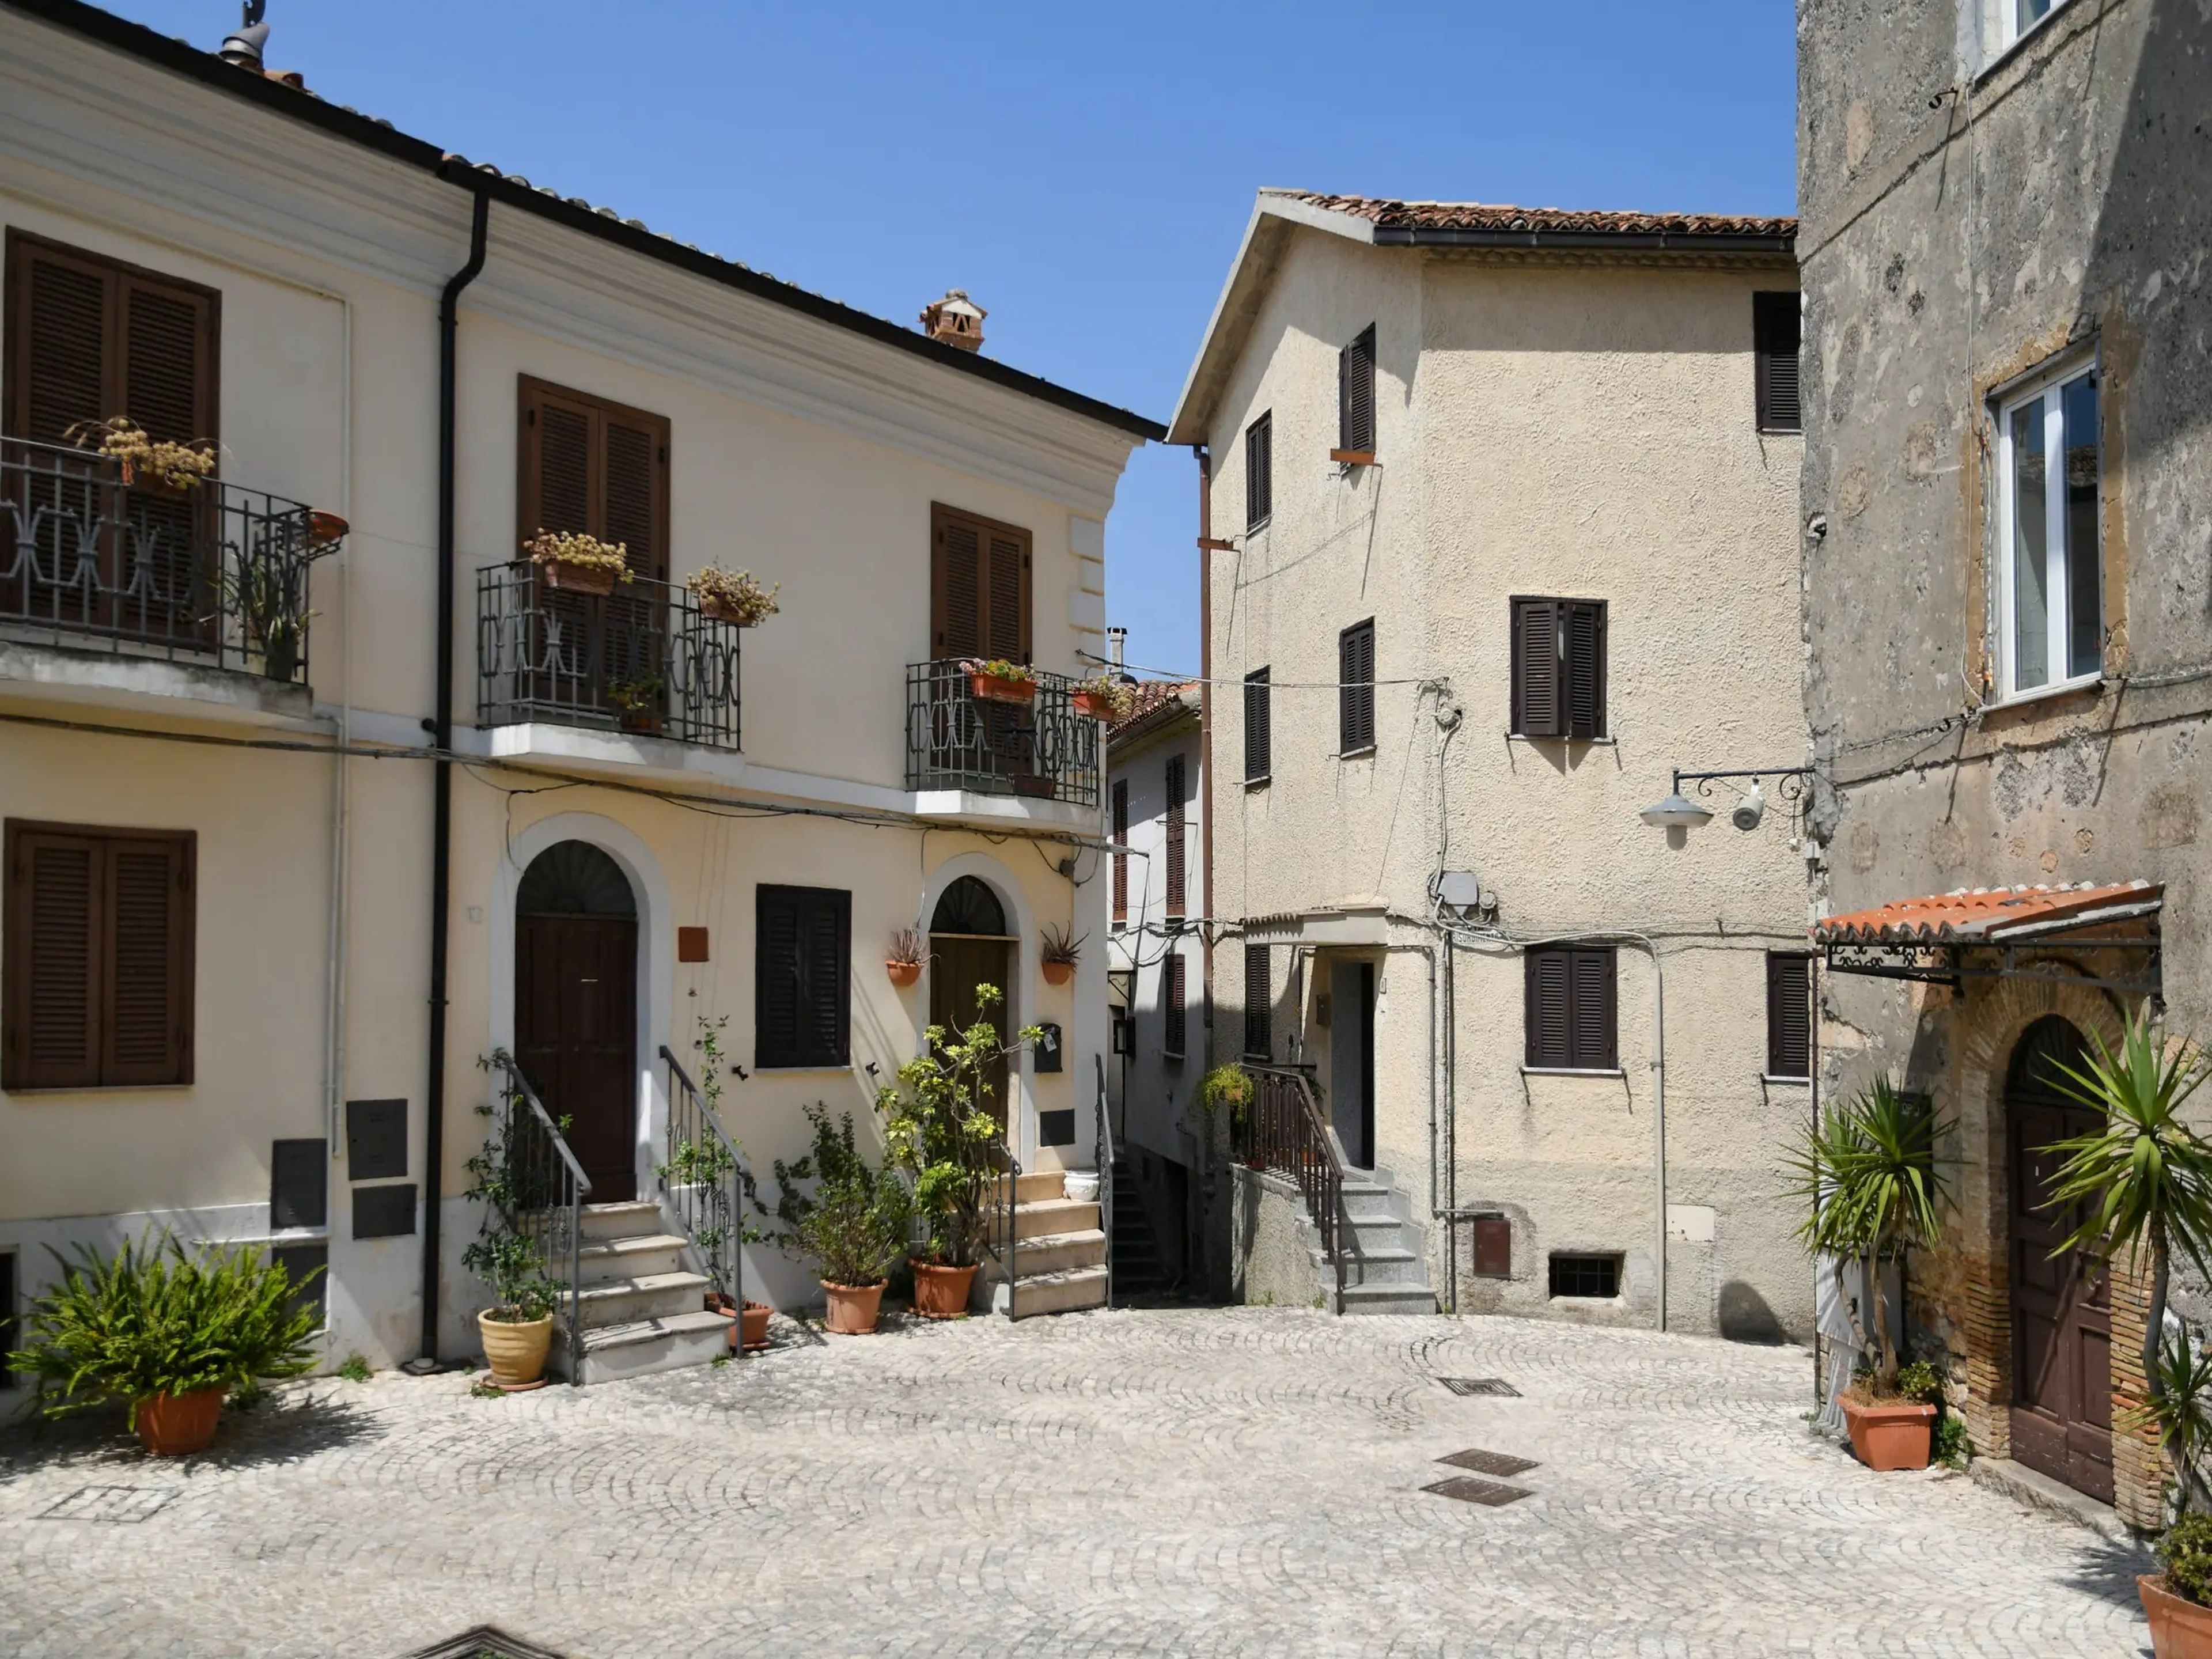 Un pueblo a las afueras de Roma vende casas abandonadas por un euro |  Business Insider España